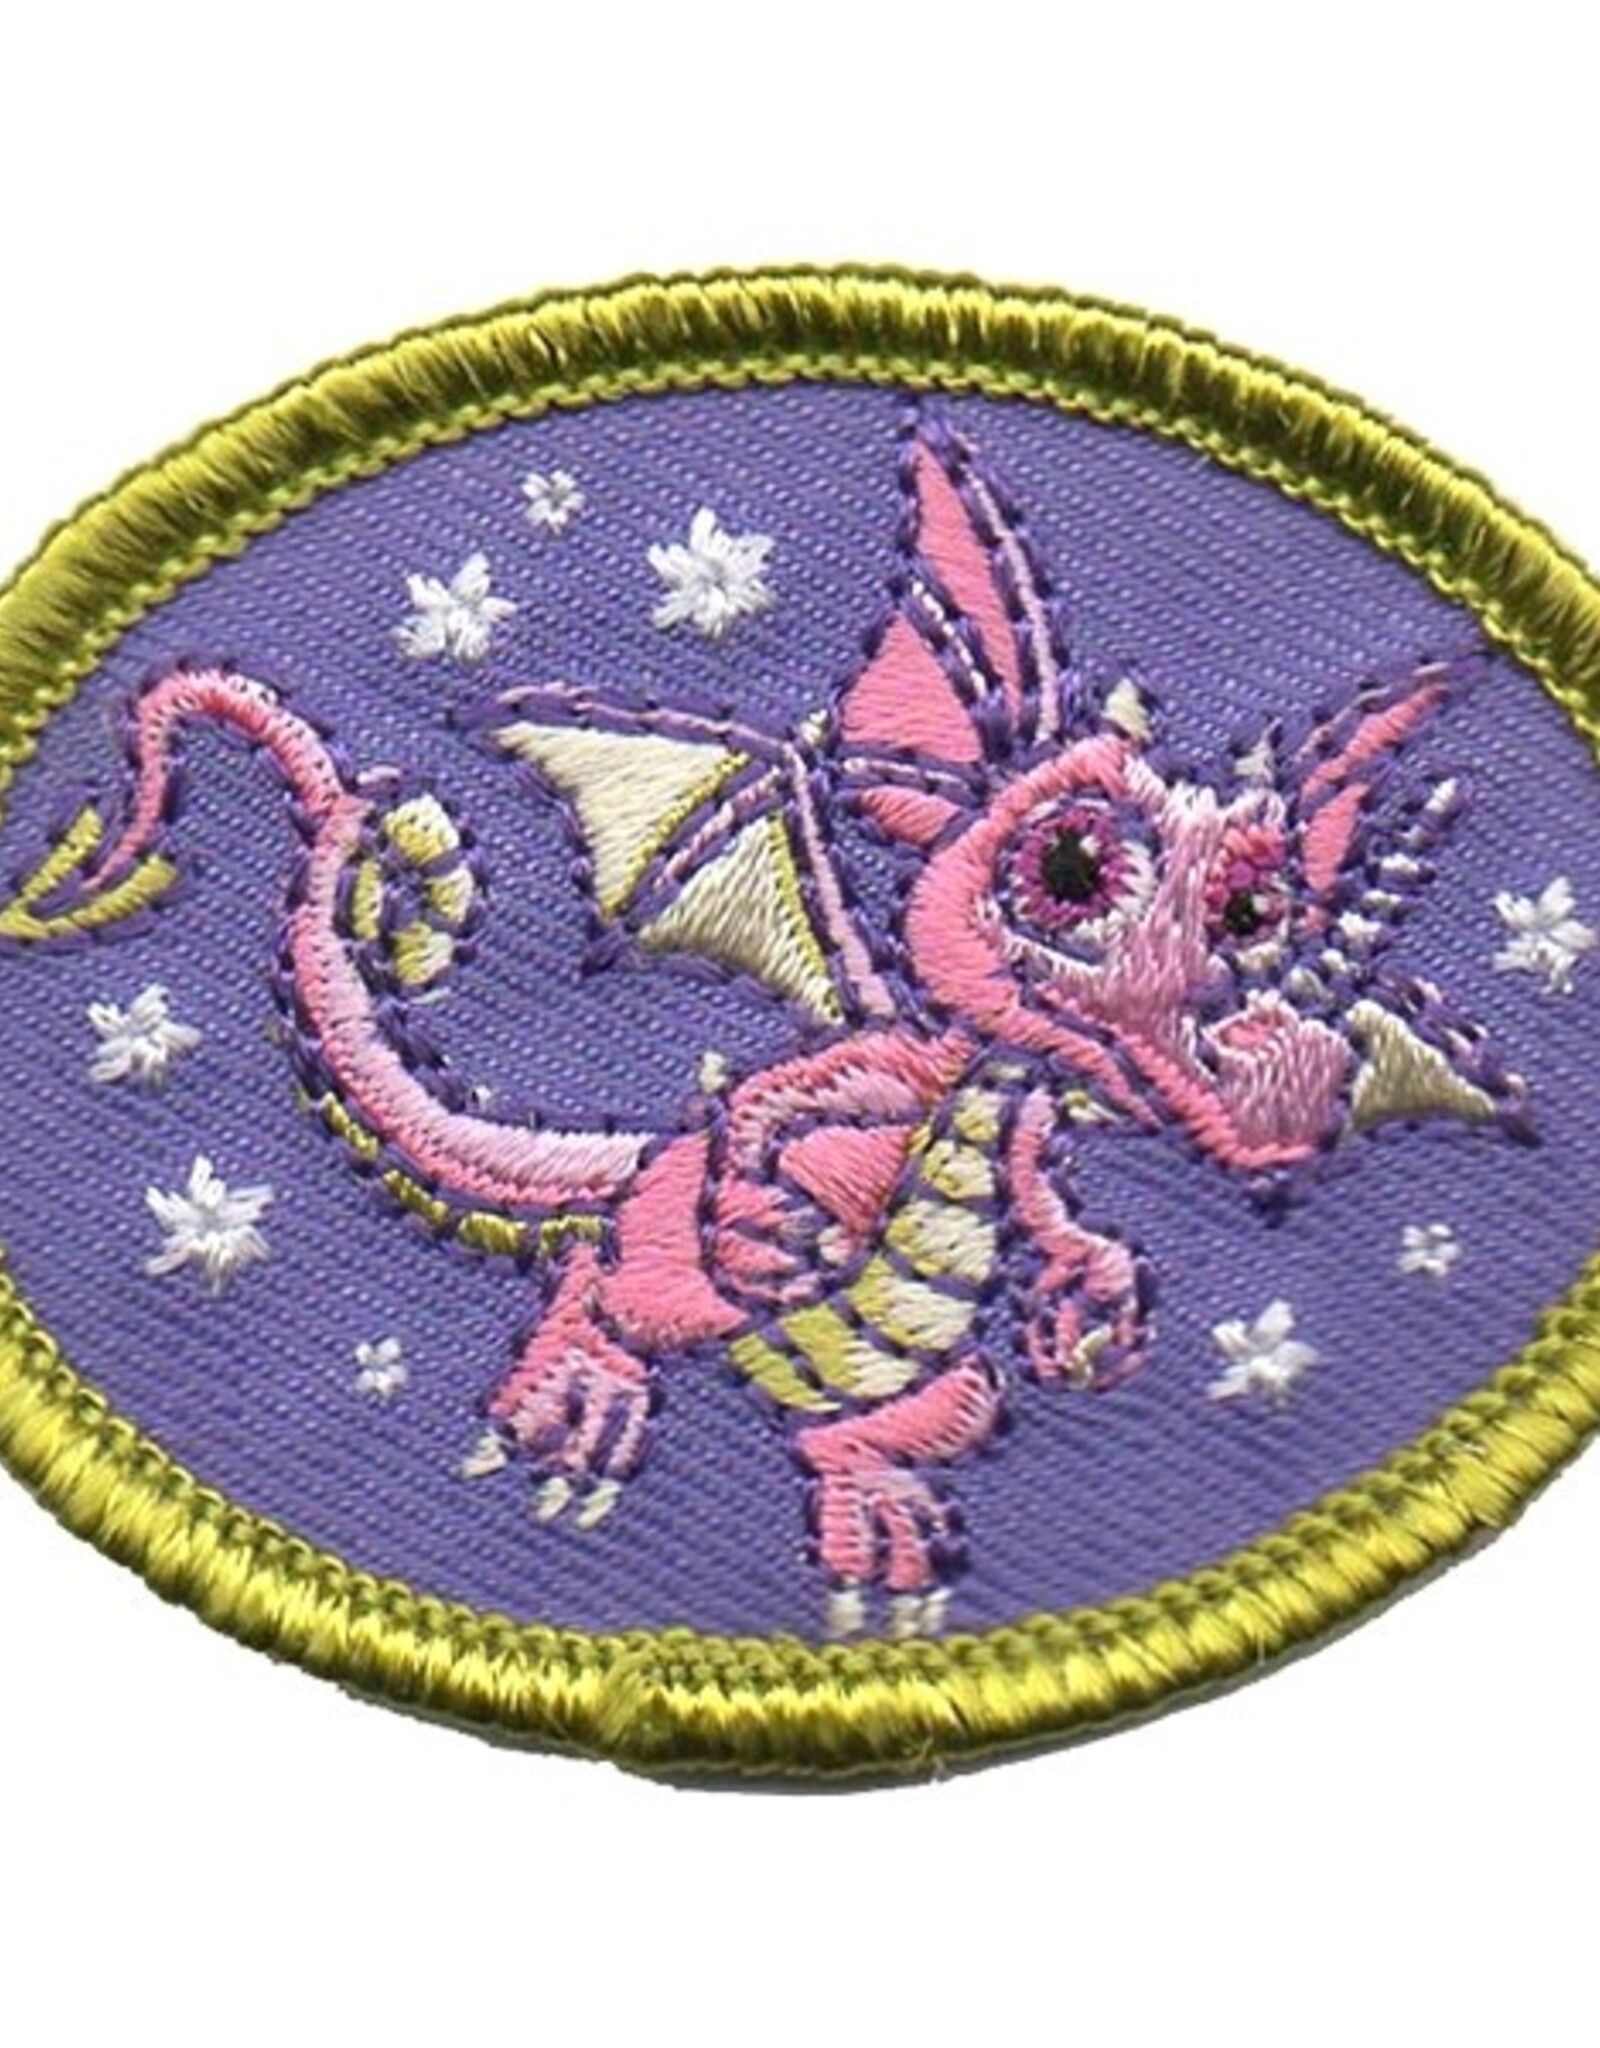 Dragon Unicorn Patch